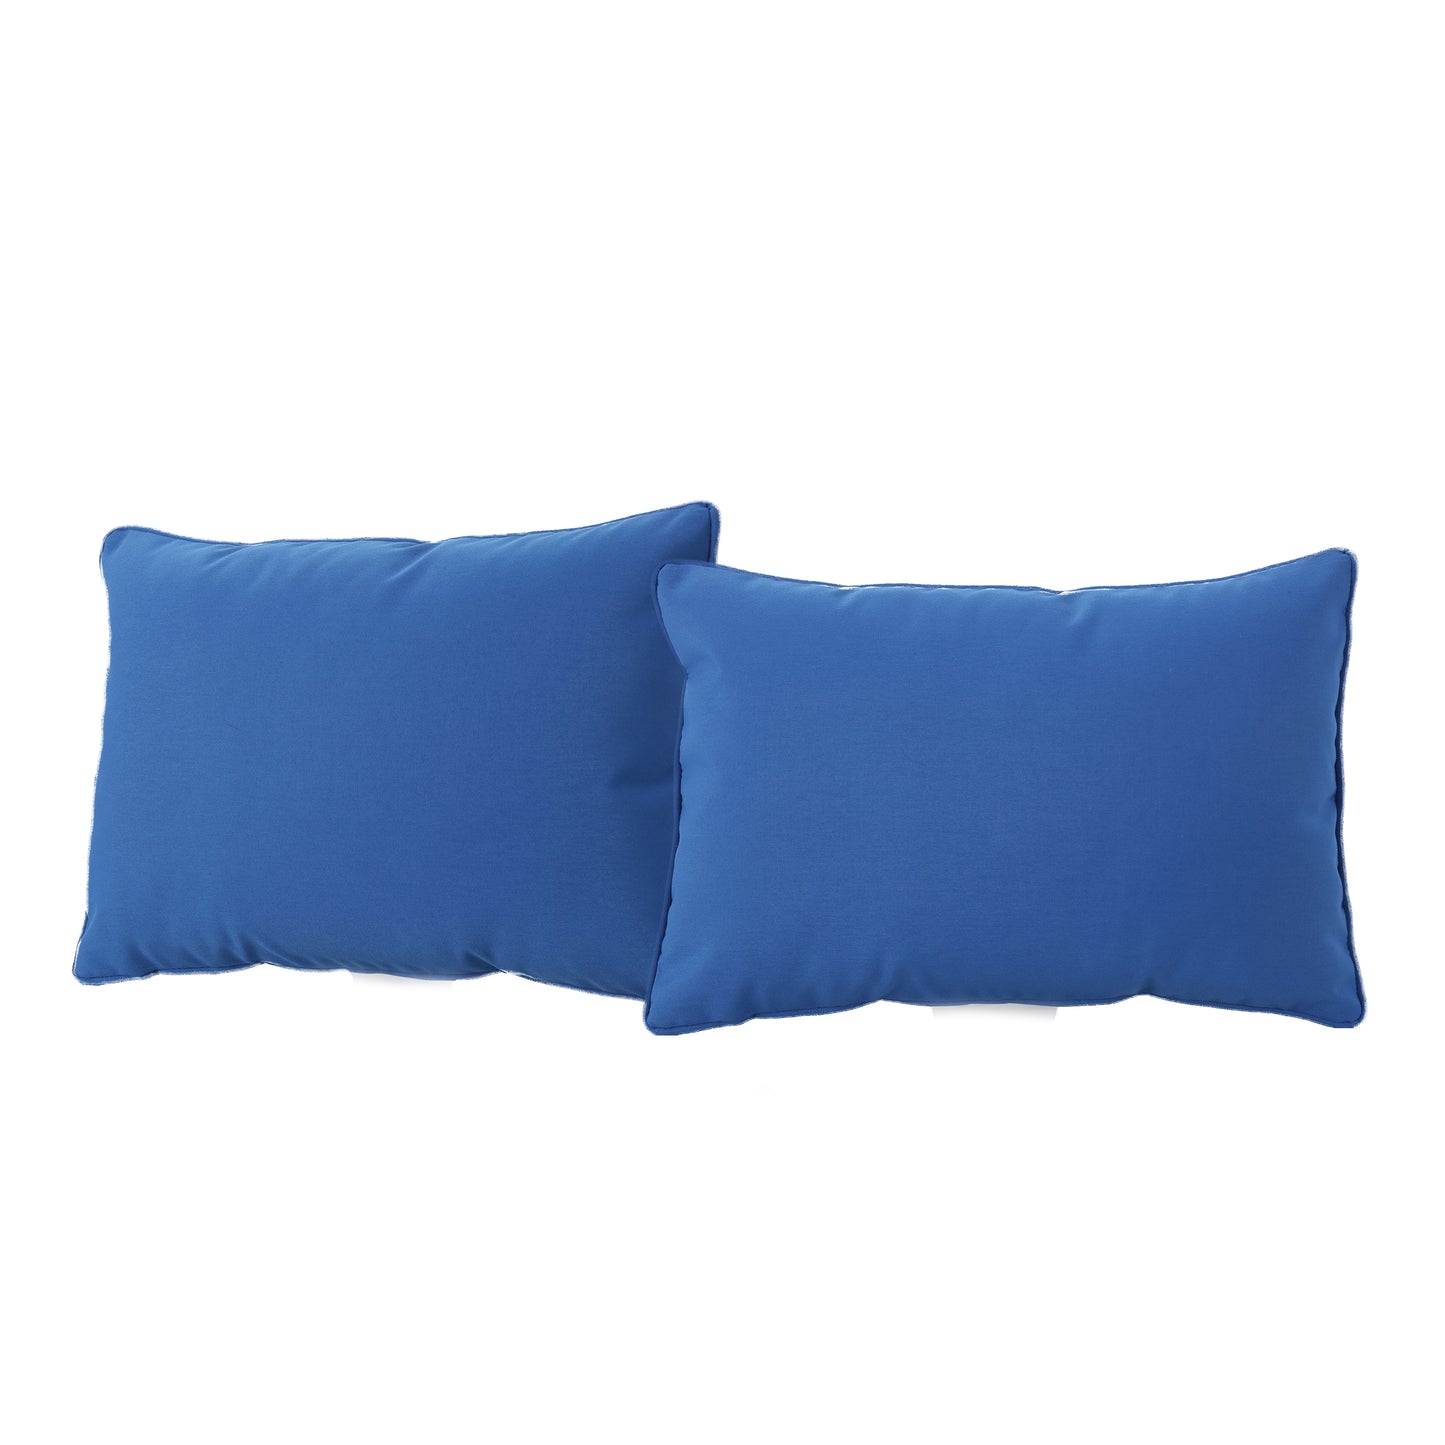 Corona Outdoor Rectangular Water Resistant Pillow